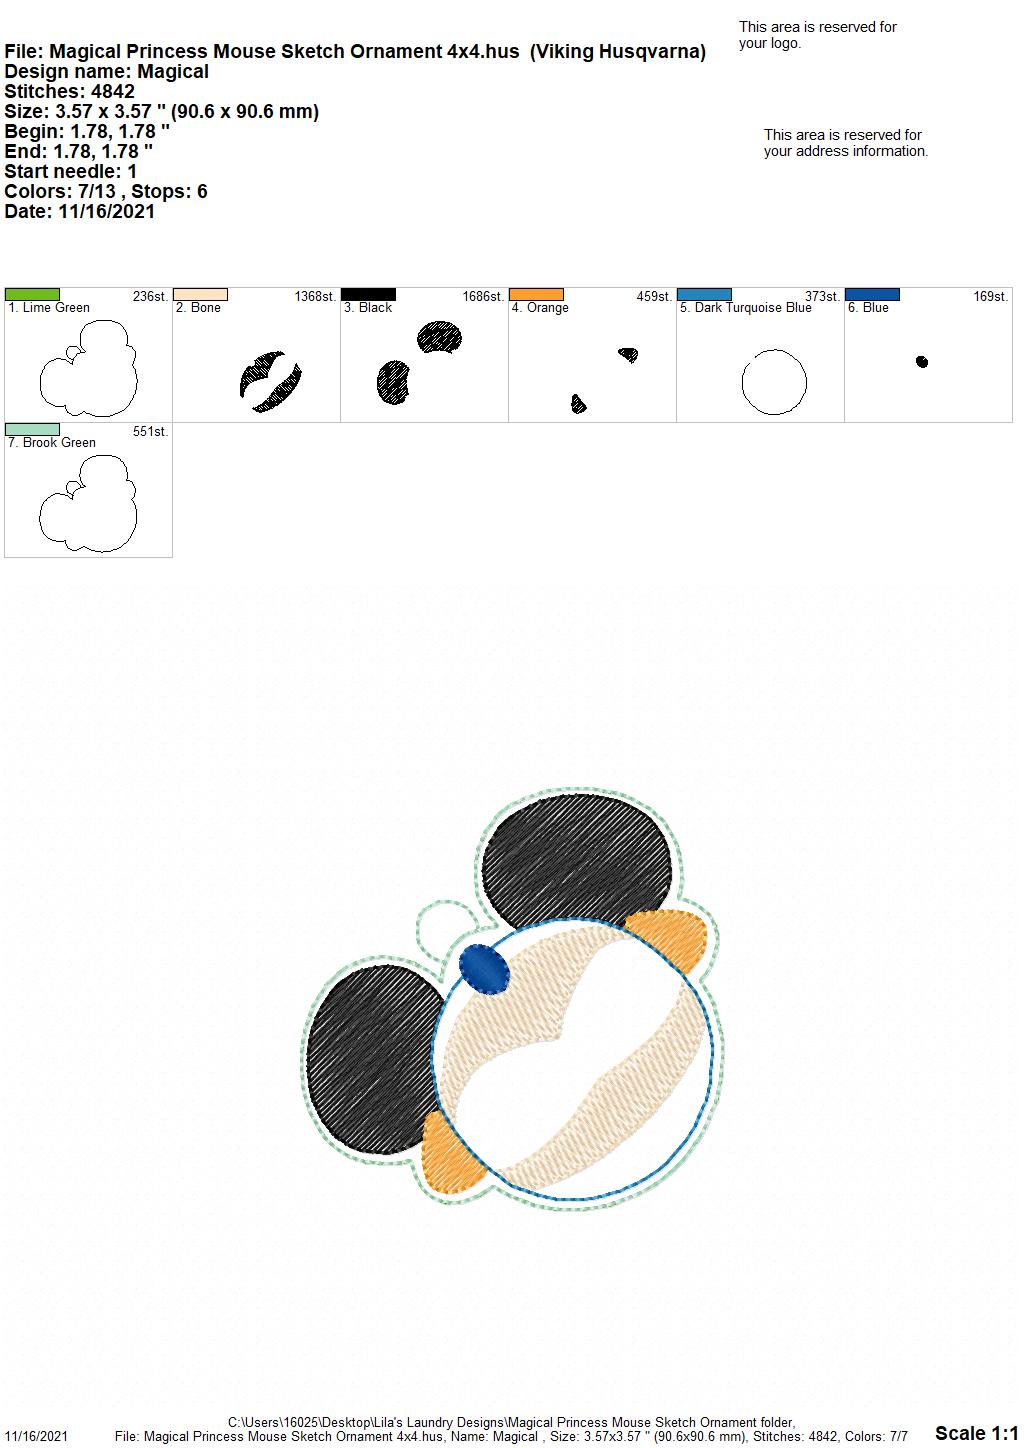 Magical Princess Mouse Sketch Ornament - Digital Embroidery Design